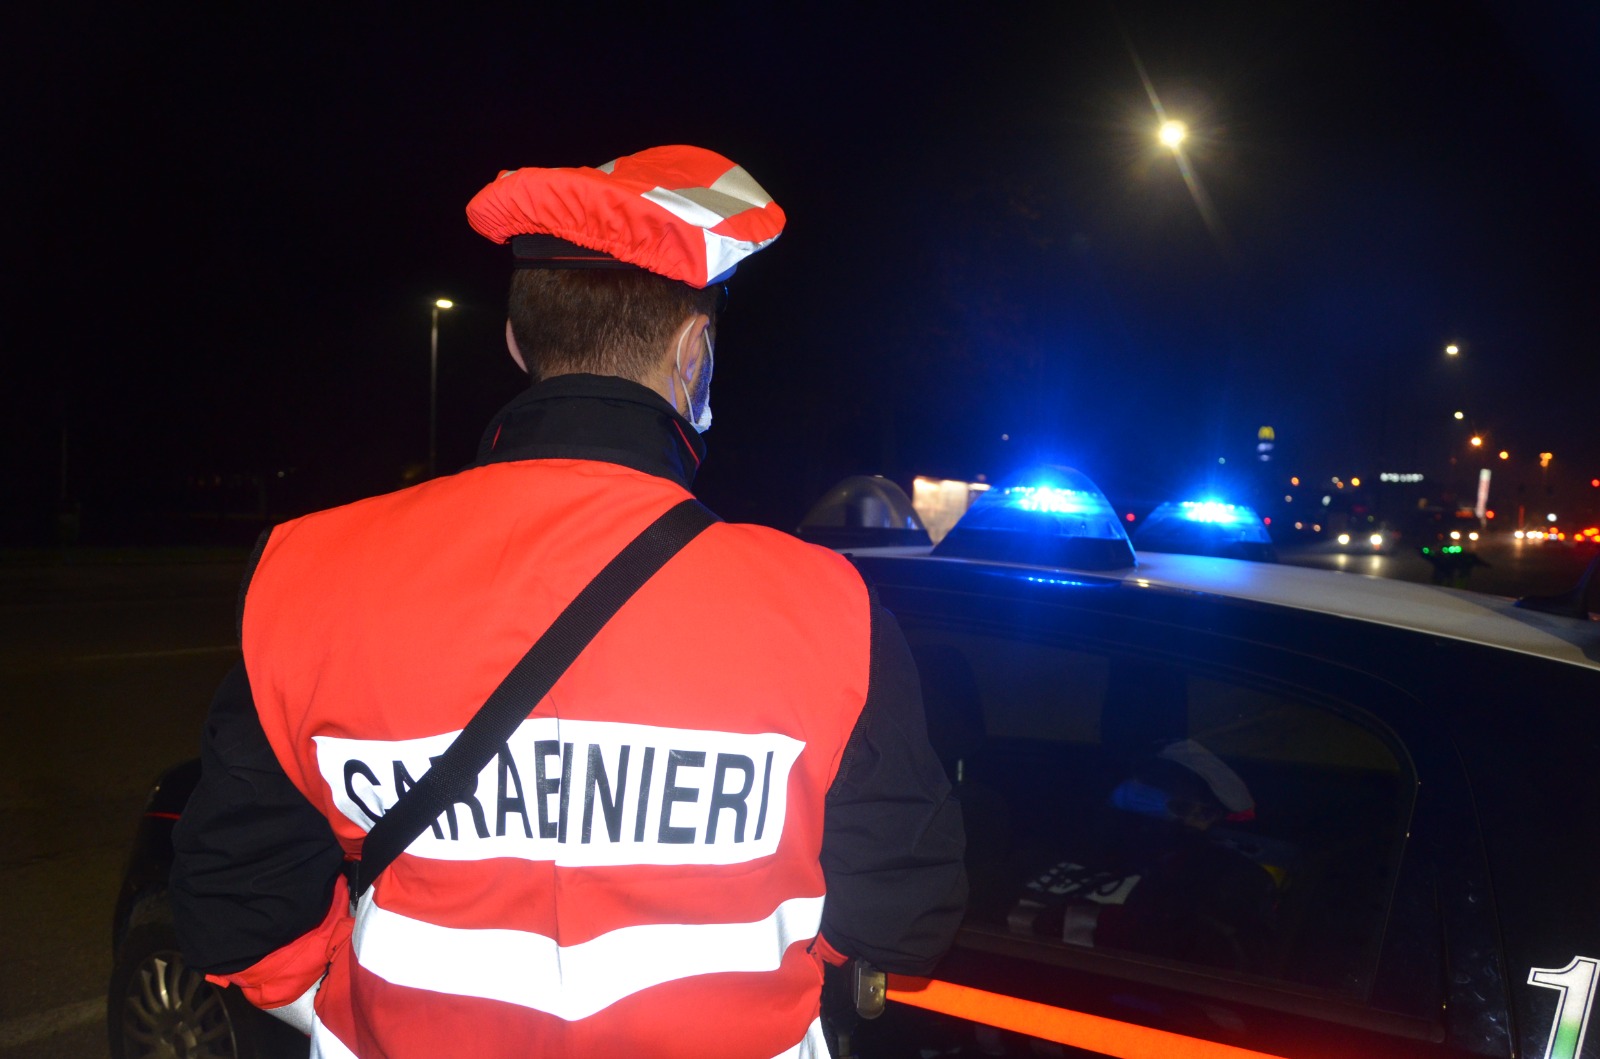  Mirandola / Gira in bici ubriaco, denunciato dai Carabinieri